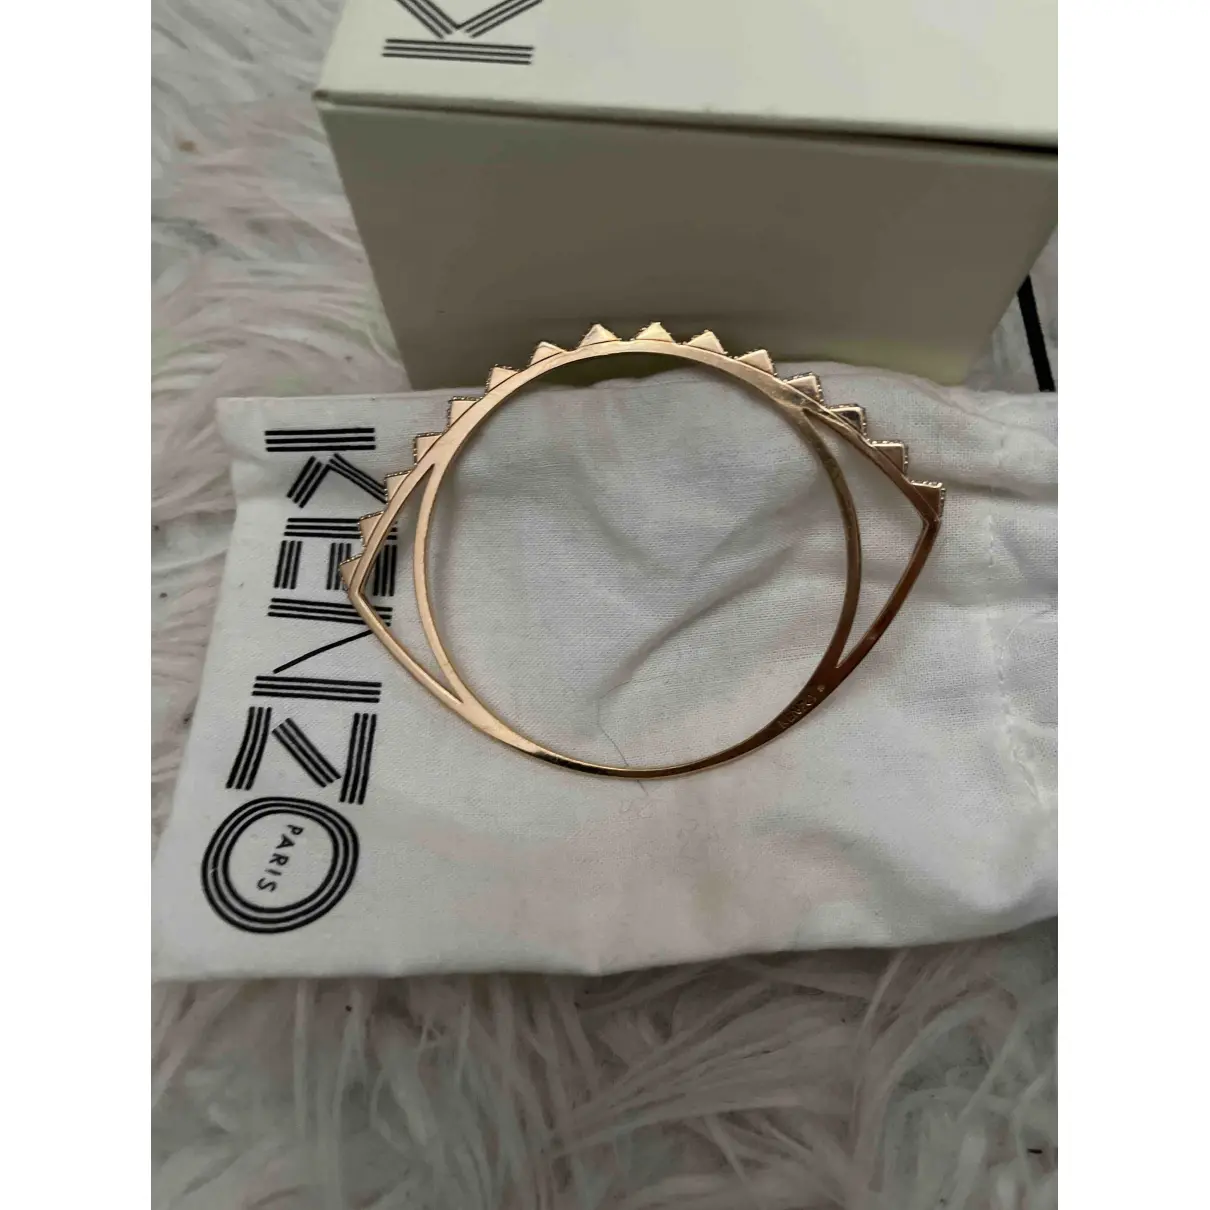 Buy Kenzo Bracelet online